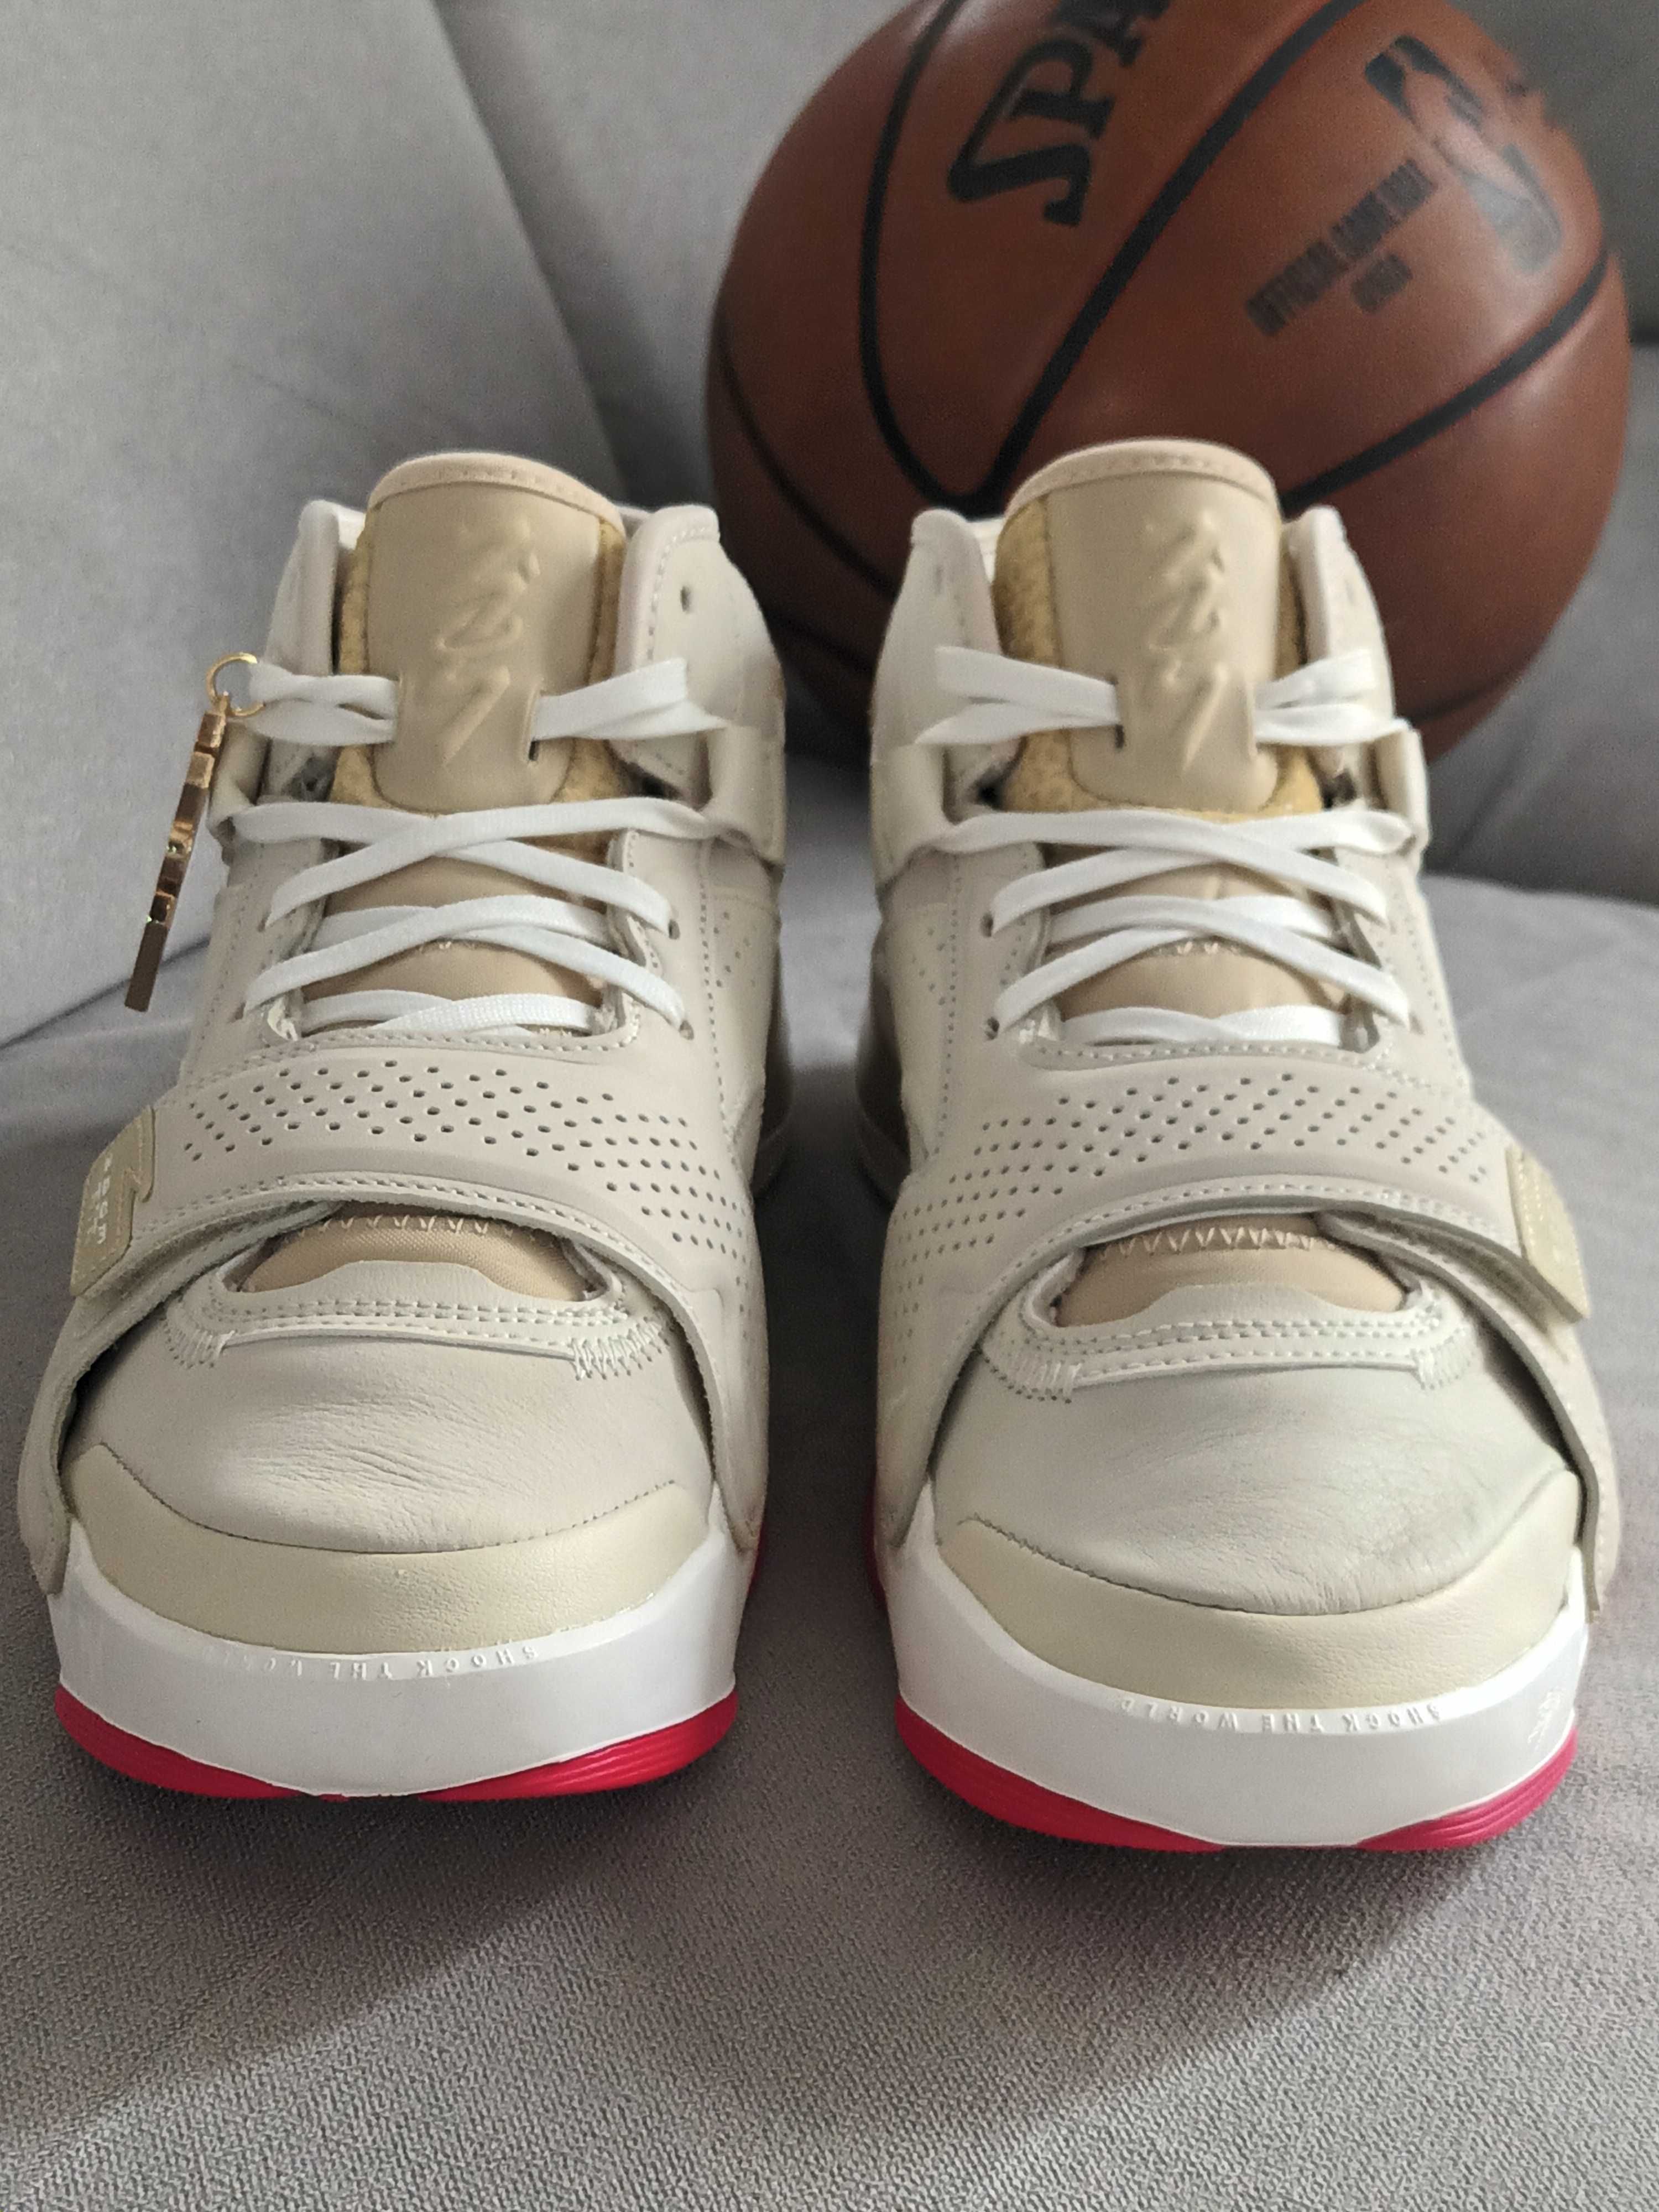 Jordan Zion 2 nowe 42,5 US 9 buty do koszykówki nba kobe lebron mb.03